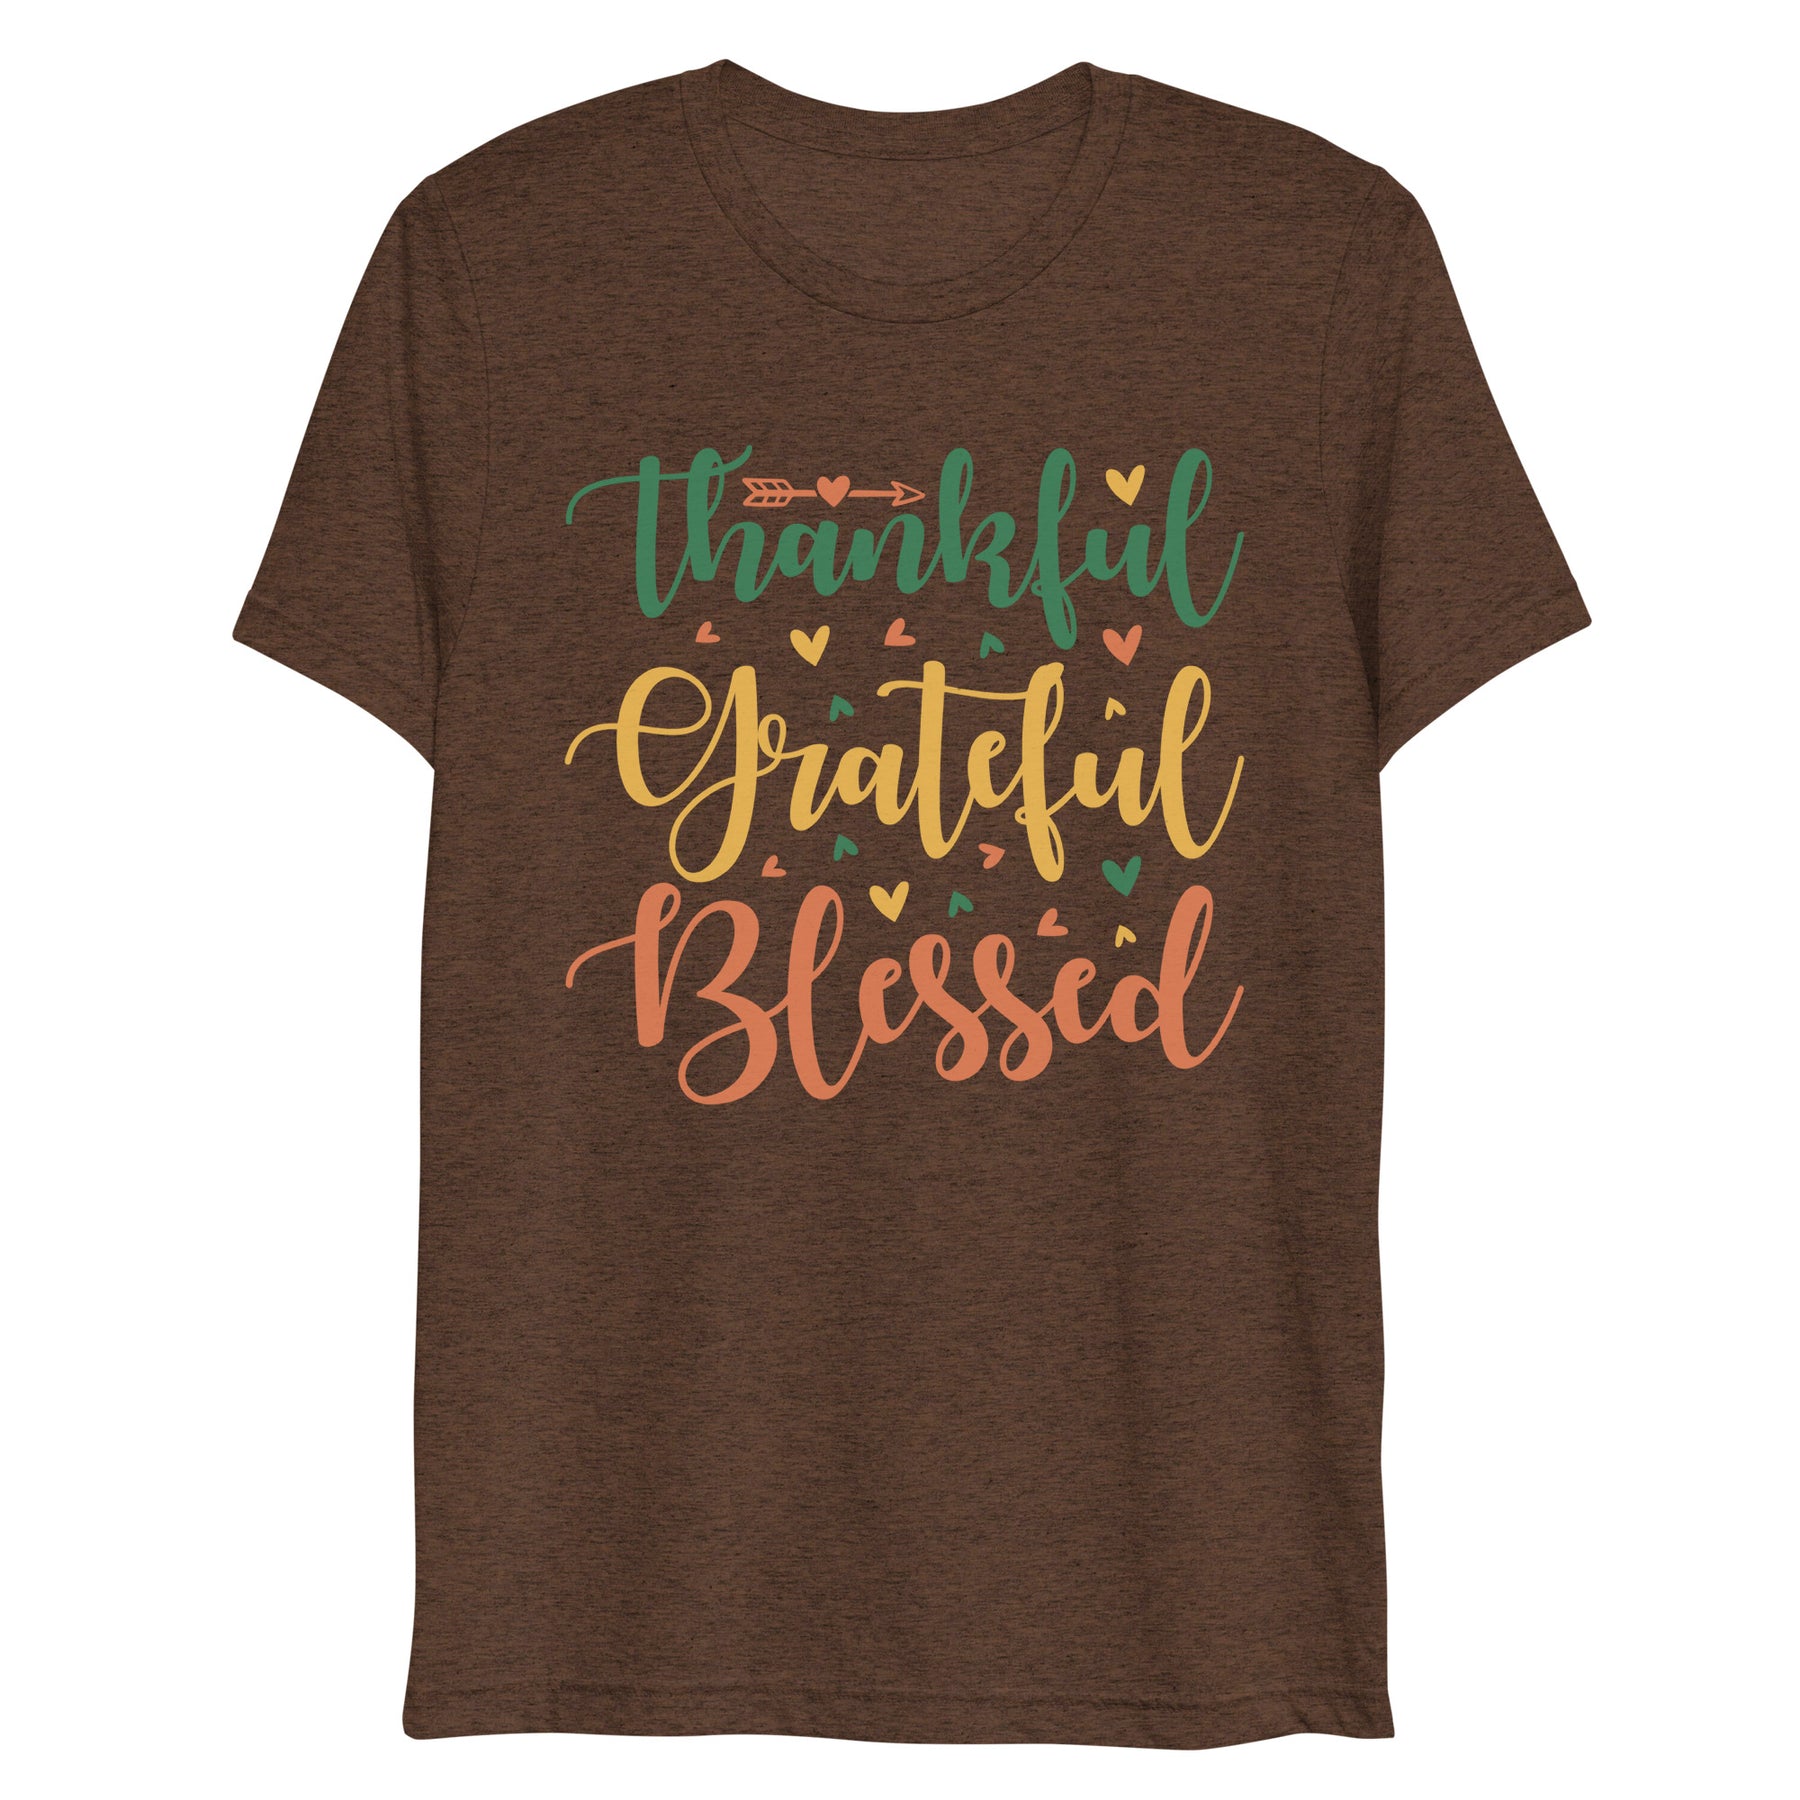 Thankful, Grateful, Blessed - Women's Tri-Blend T-Shirt